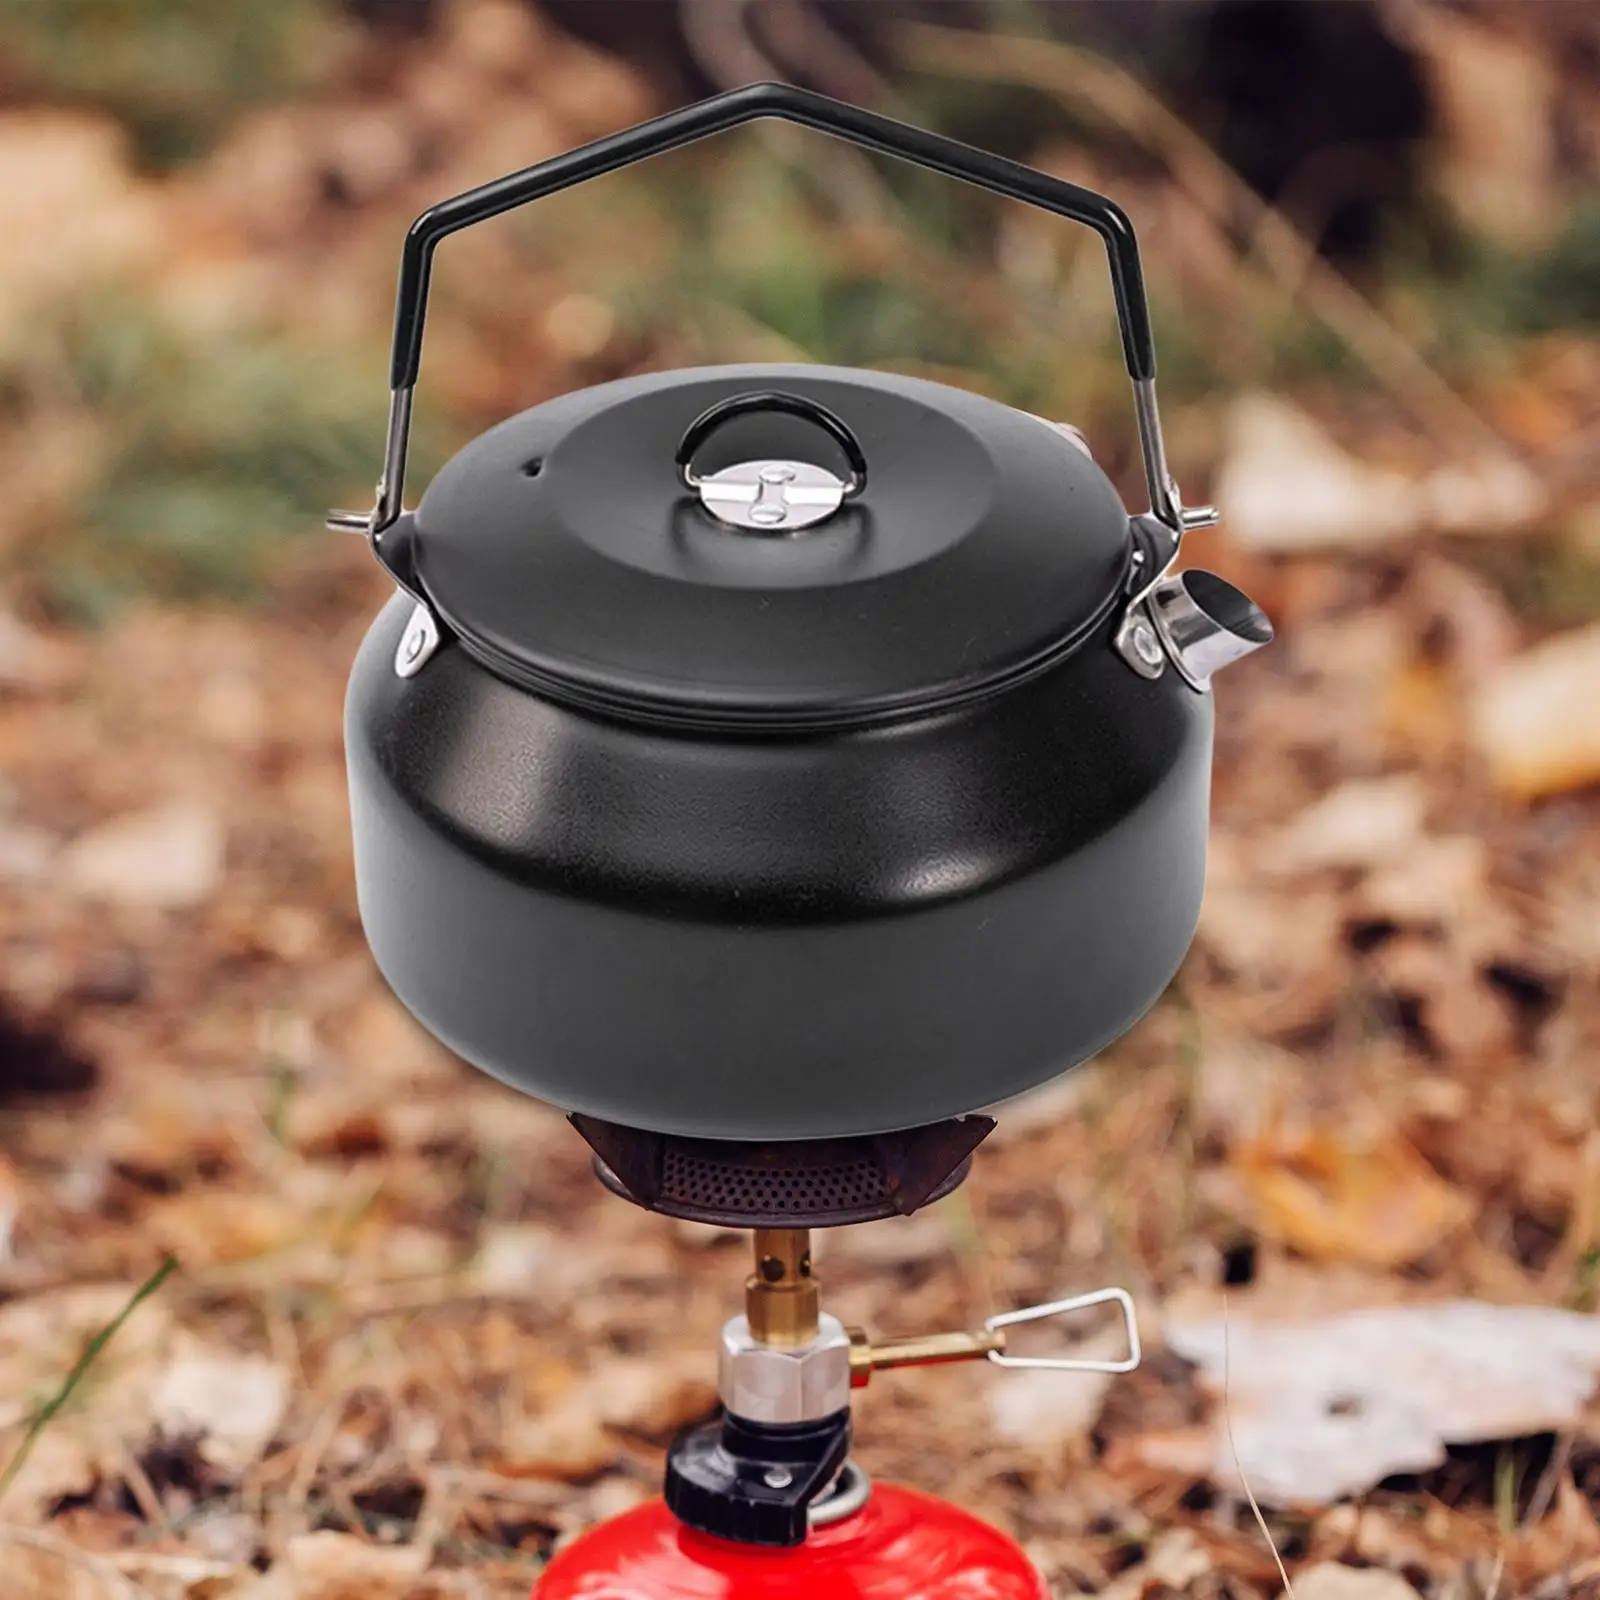 Camping Water Kettle Teakettle Teapot Anti Scald Handle Lightweight Water Boiler Tea Pot for Hiking Mountaineering Fishing